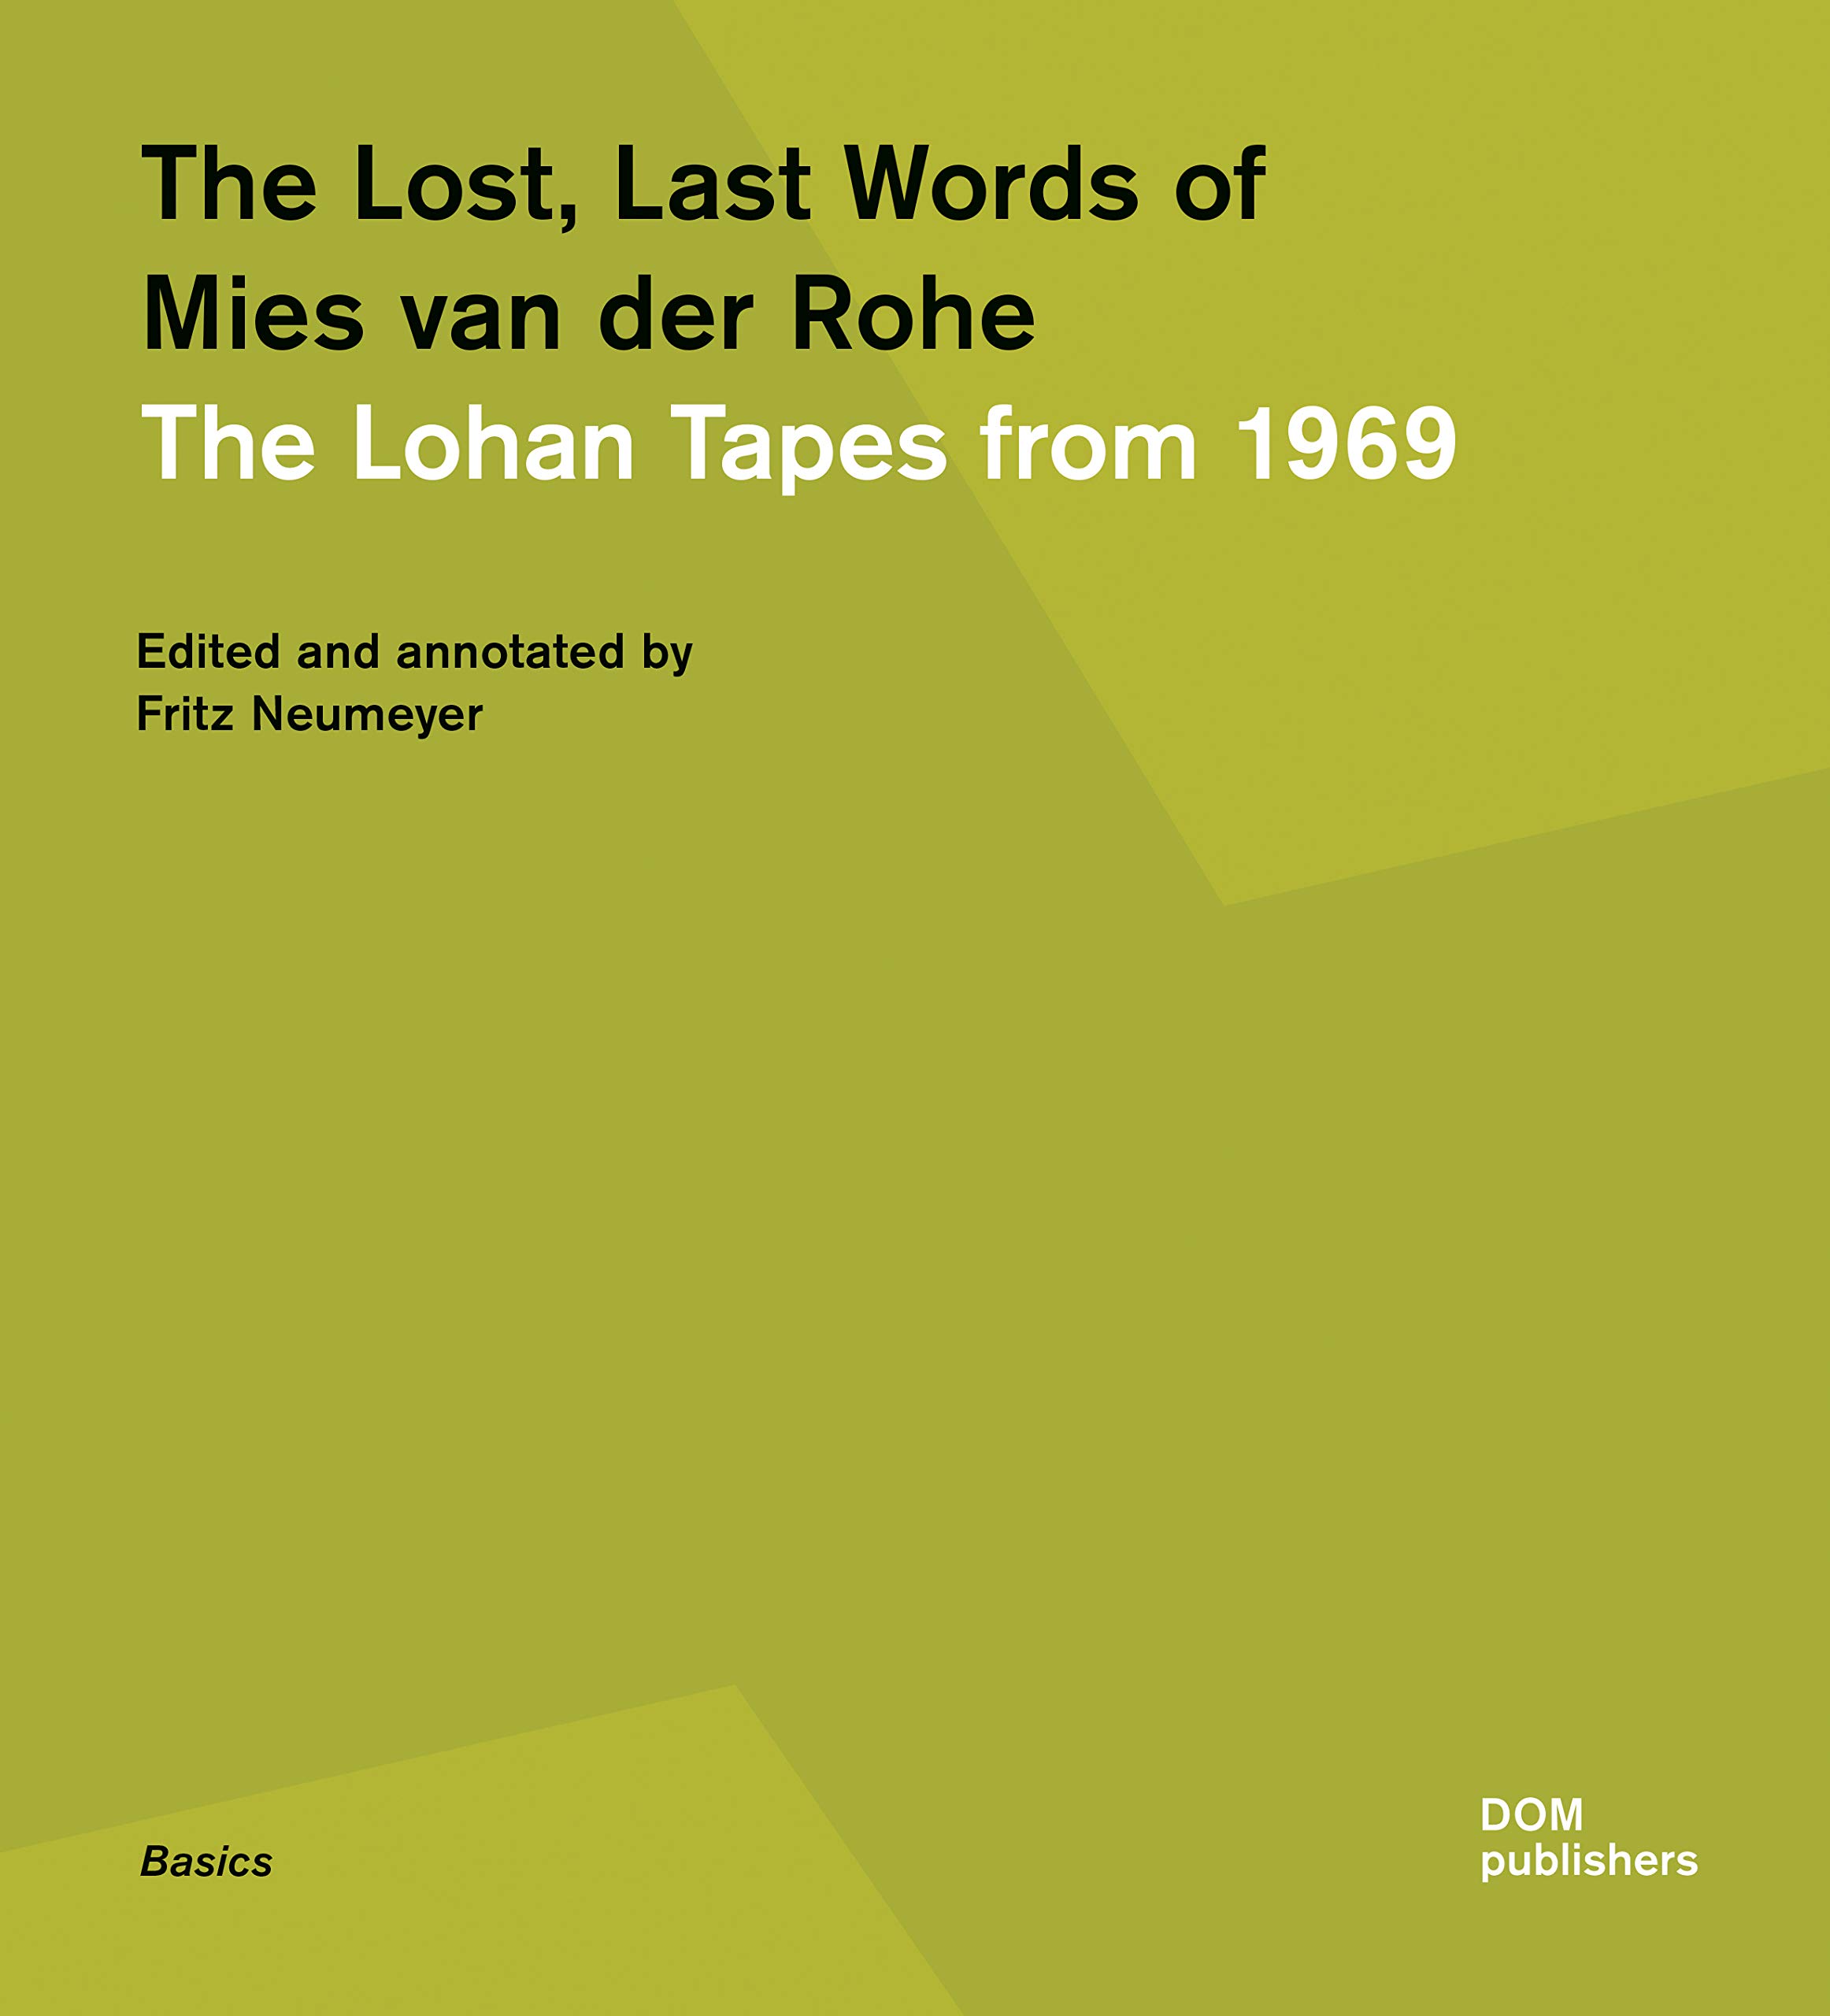 The Lost Last Words of Mies van der Rohe